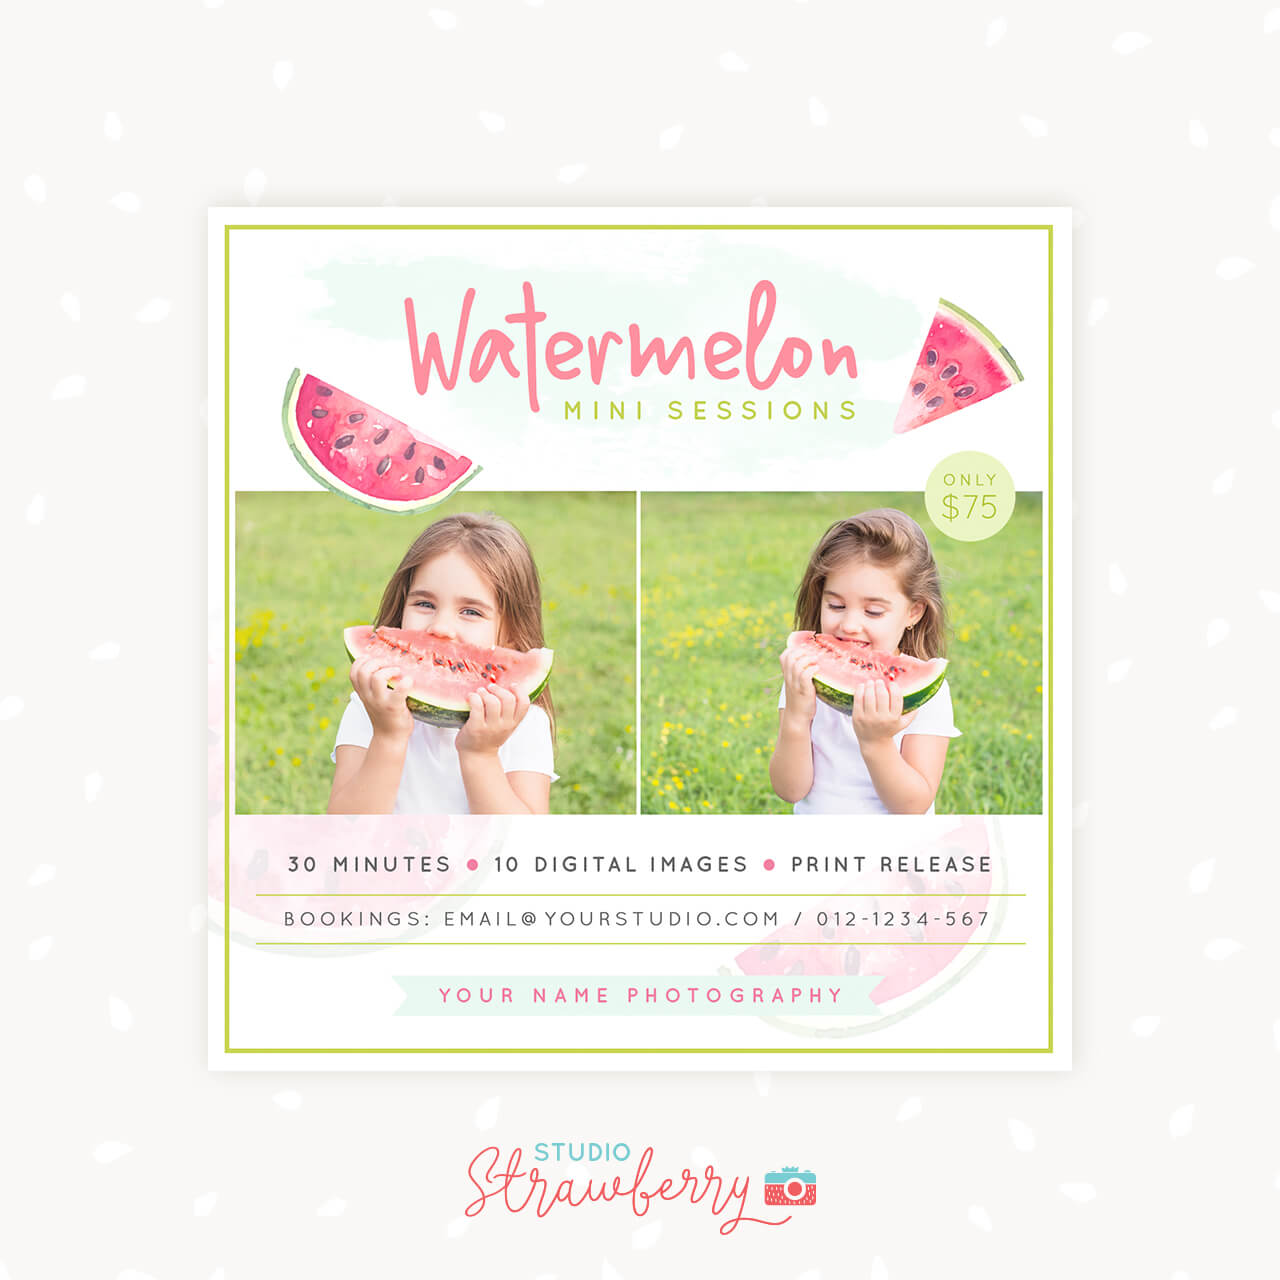 Watermelon mini sessions template